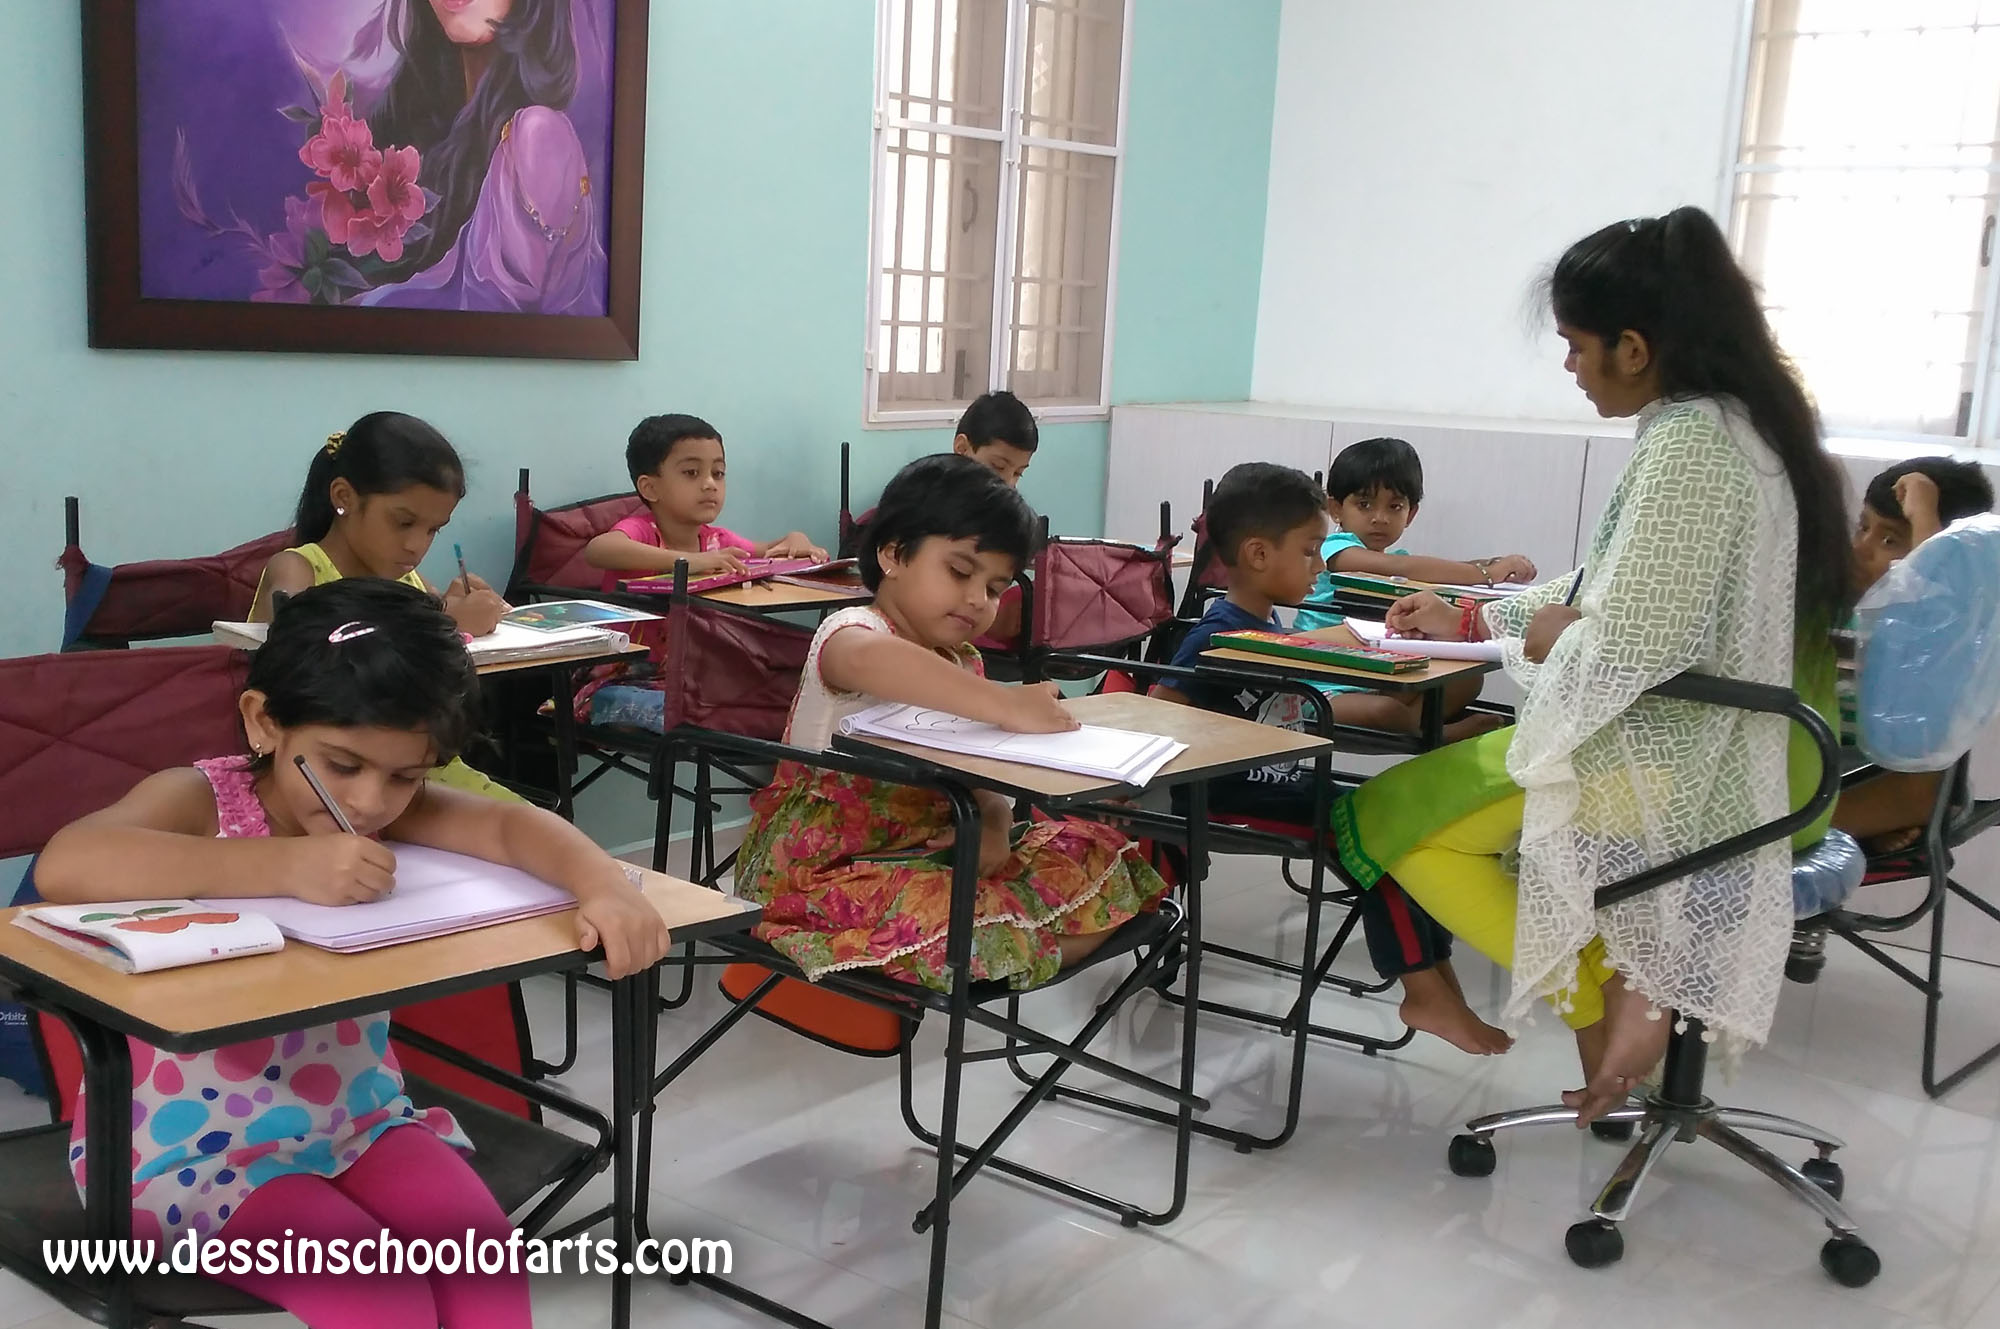 Dessin School of Arts, Dessin School of Arts, sketching classes For Kids in Anna Nagar East L Block Class Room Photo 1 